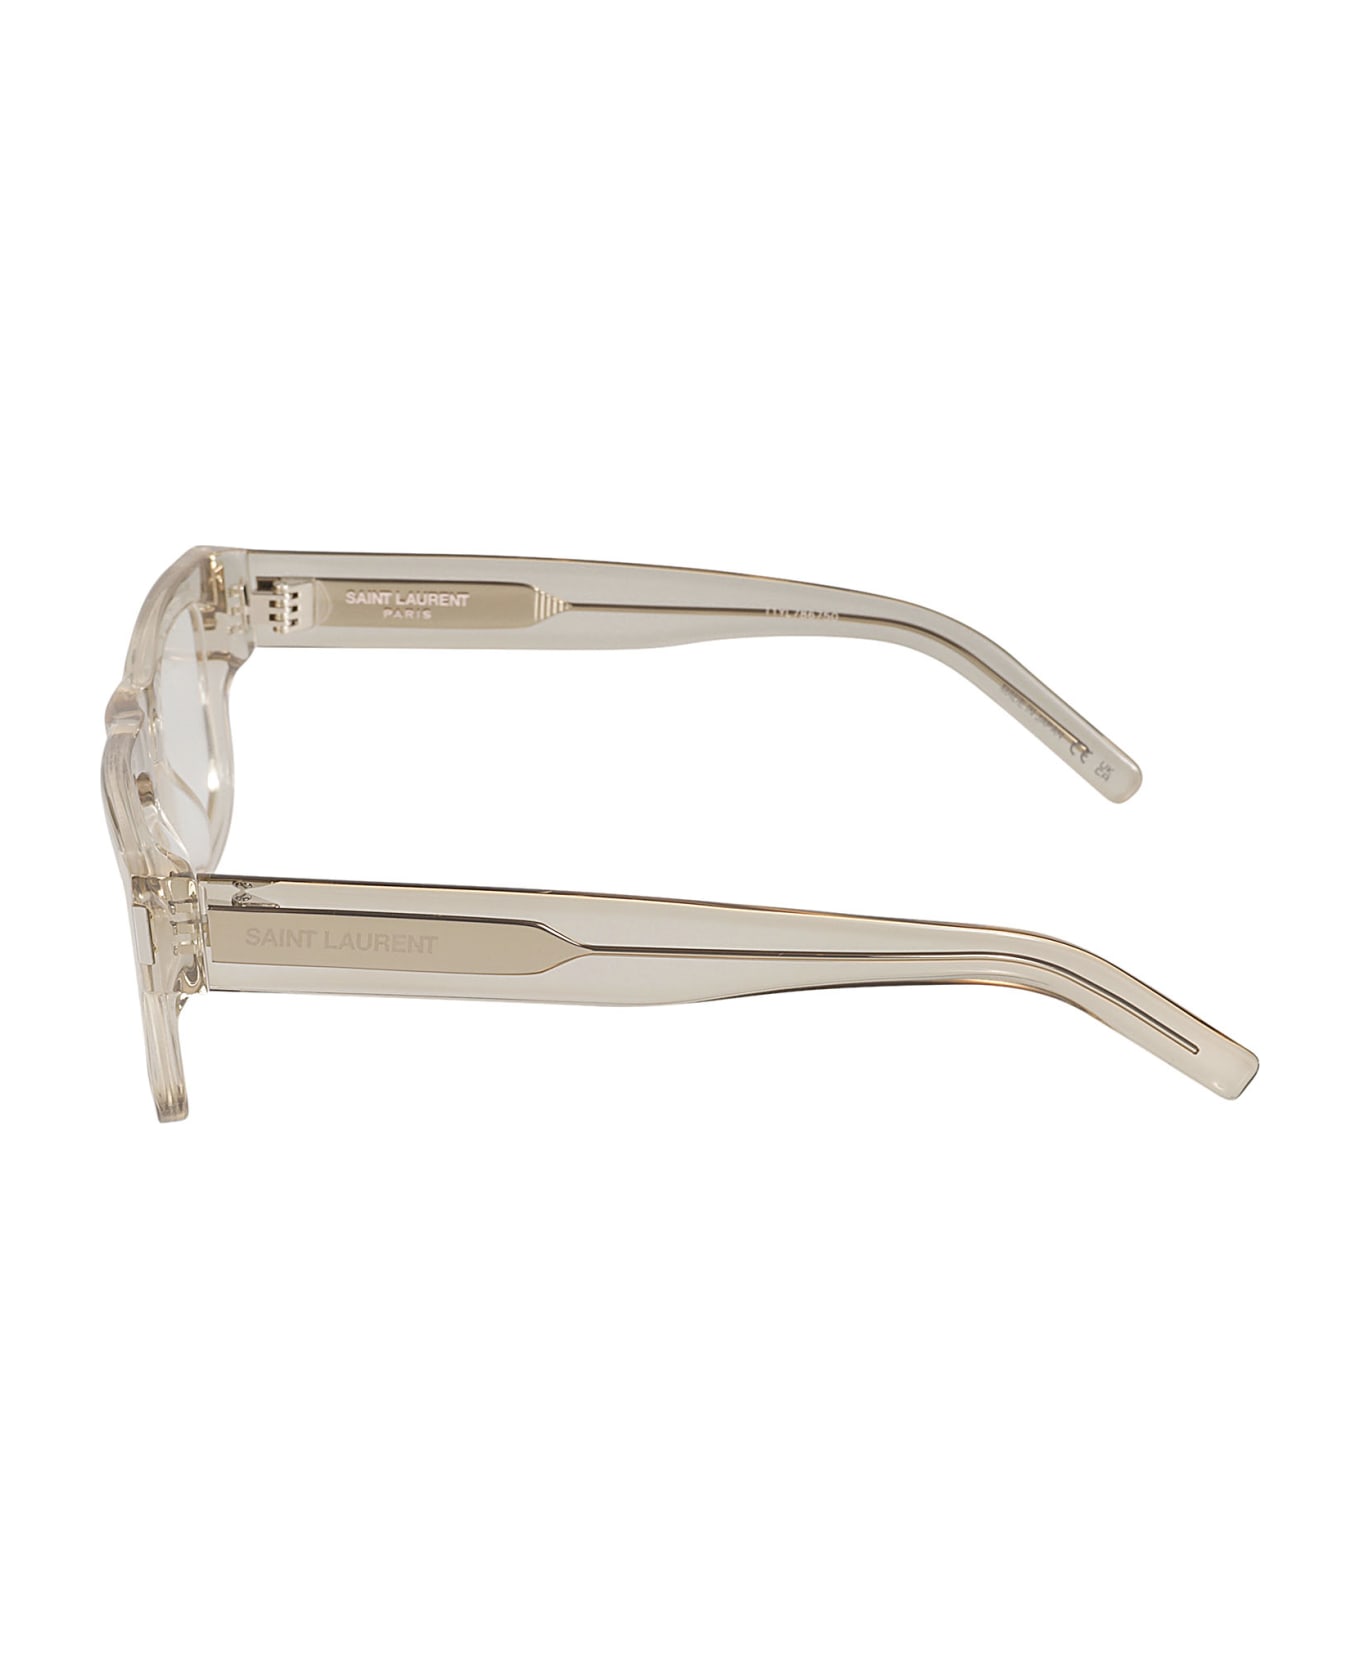 Saint Laurent Eyewear Square Frame Glasses - Beige/Transparent アイウェア